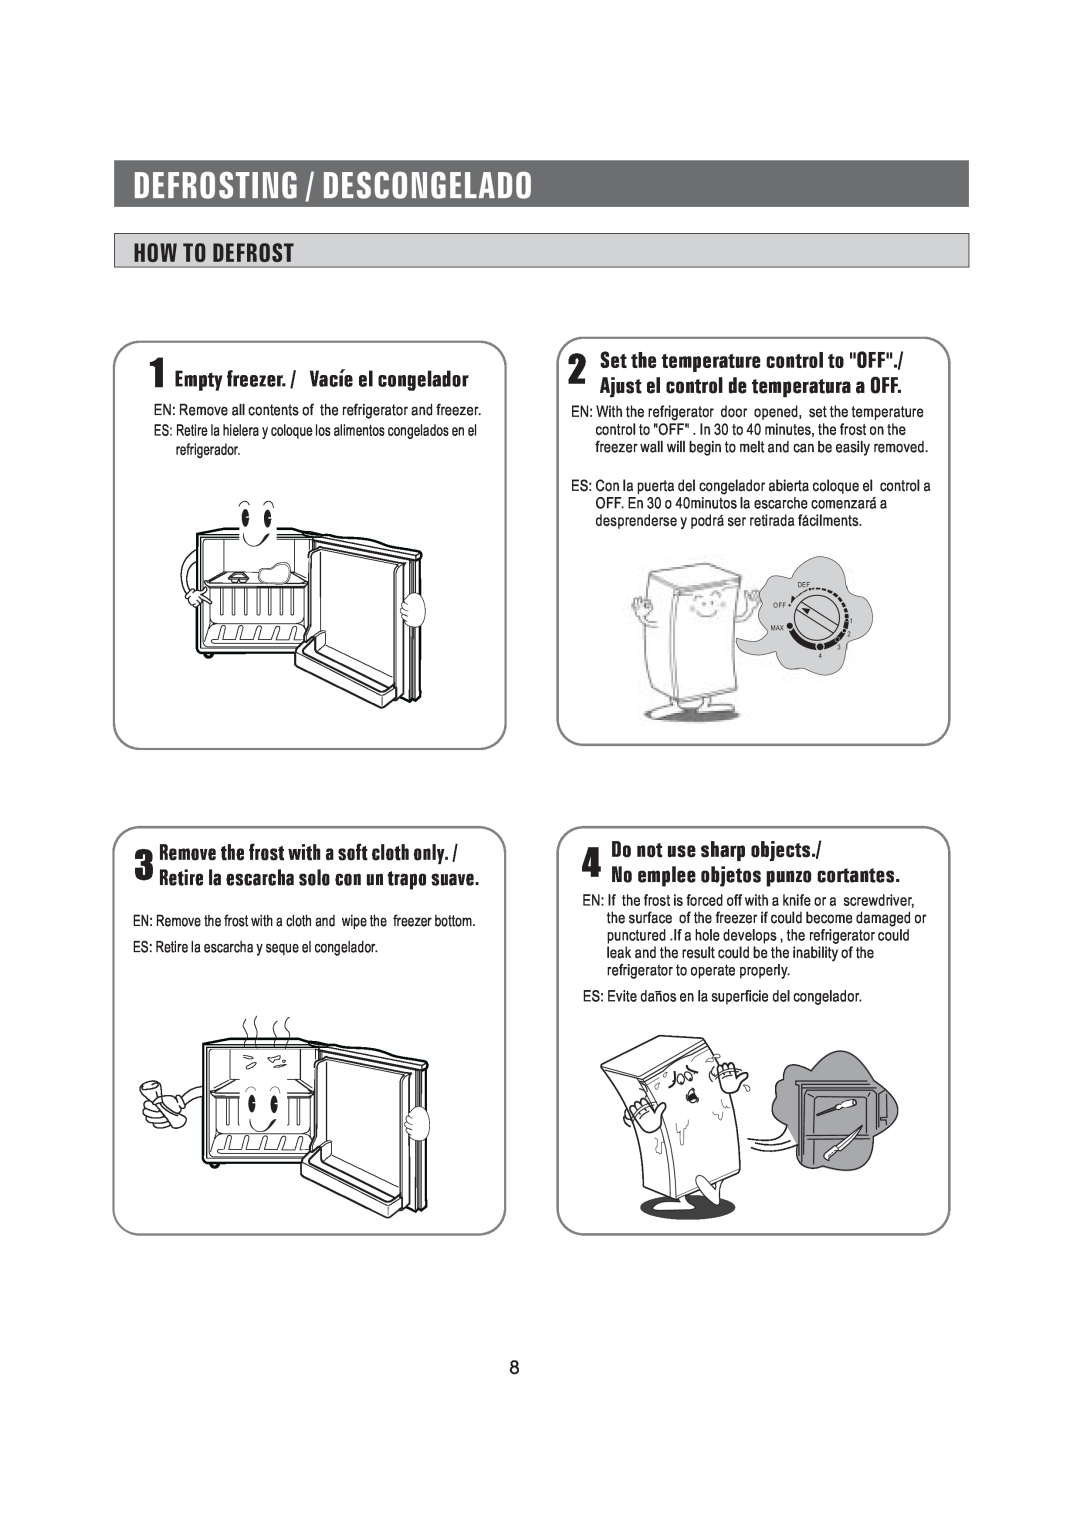 Samsung SRG-058 manual Defrosting / Descongelado, How To Defrost, Empty freezer. / Vacie el congelador 